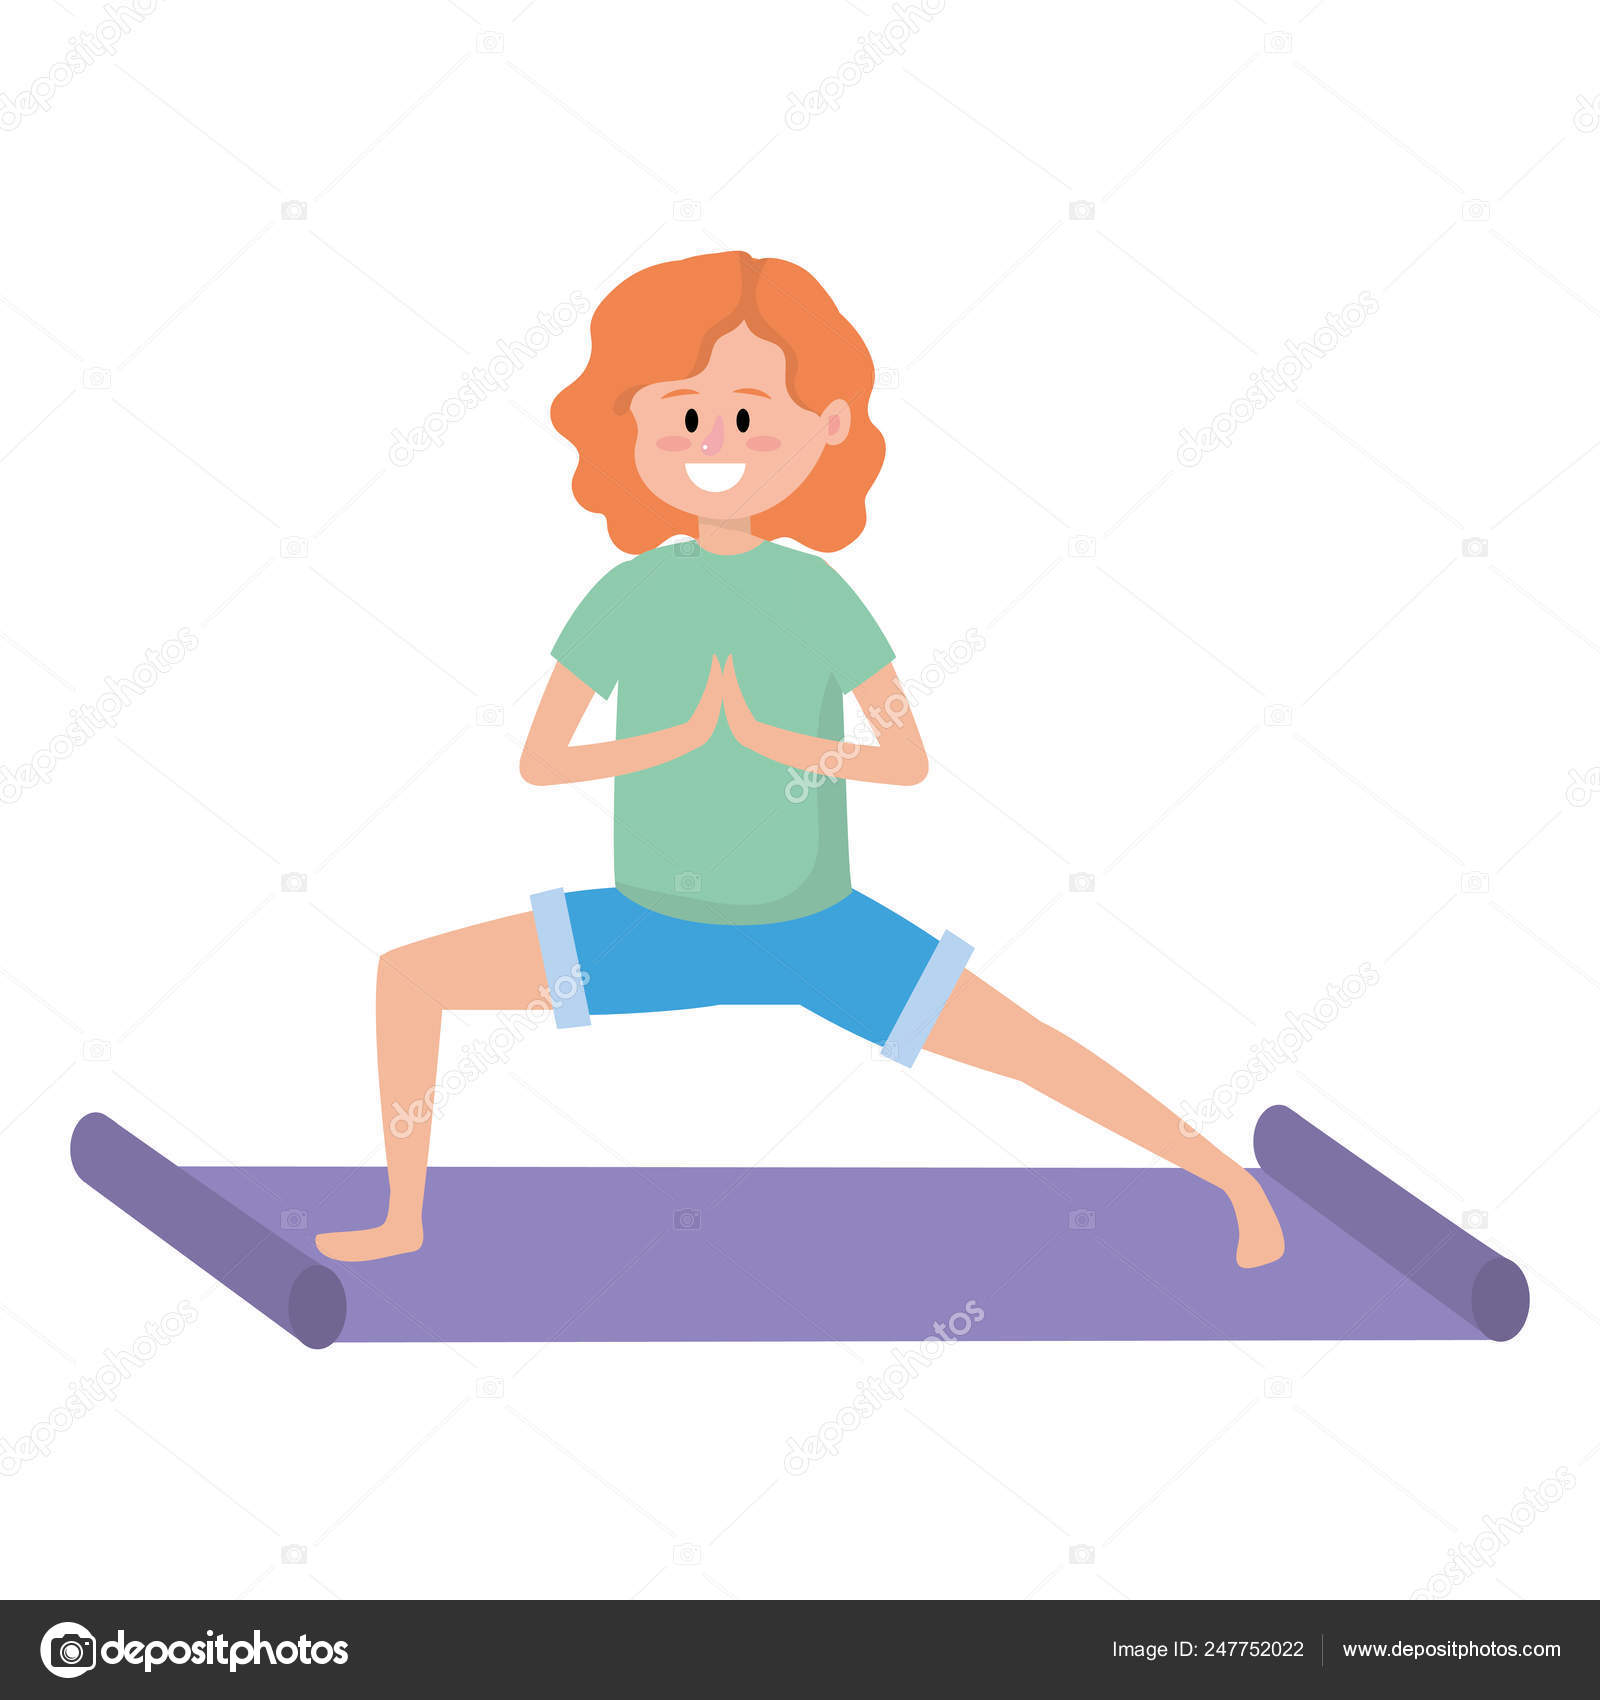 https://st4.depositphotos.com/11953928/24775/v/1600/depositphotos_247752022-stock-illustration-fit-woman-practicing-yoga.jpg